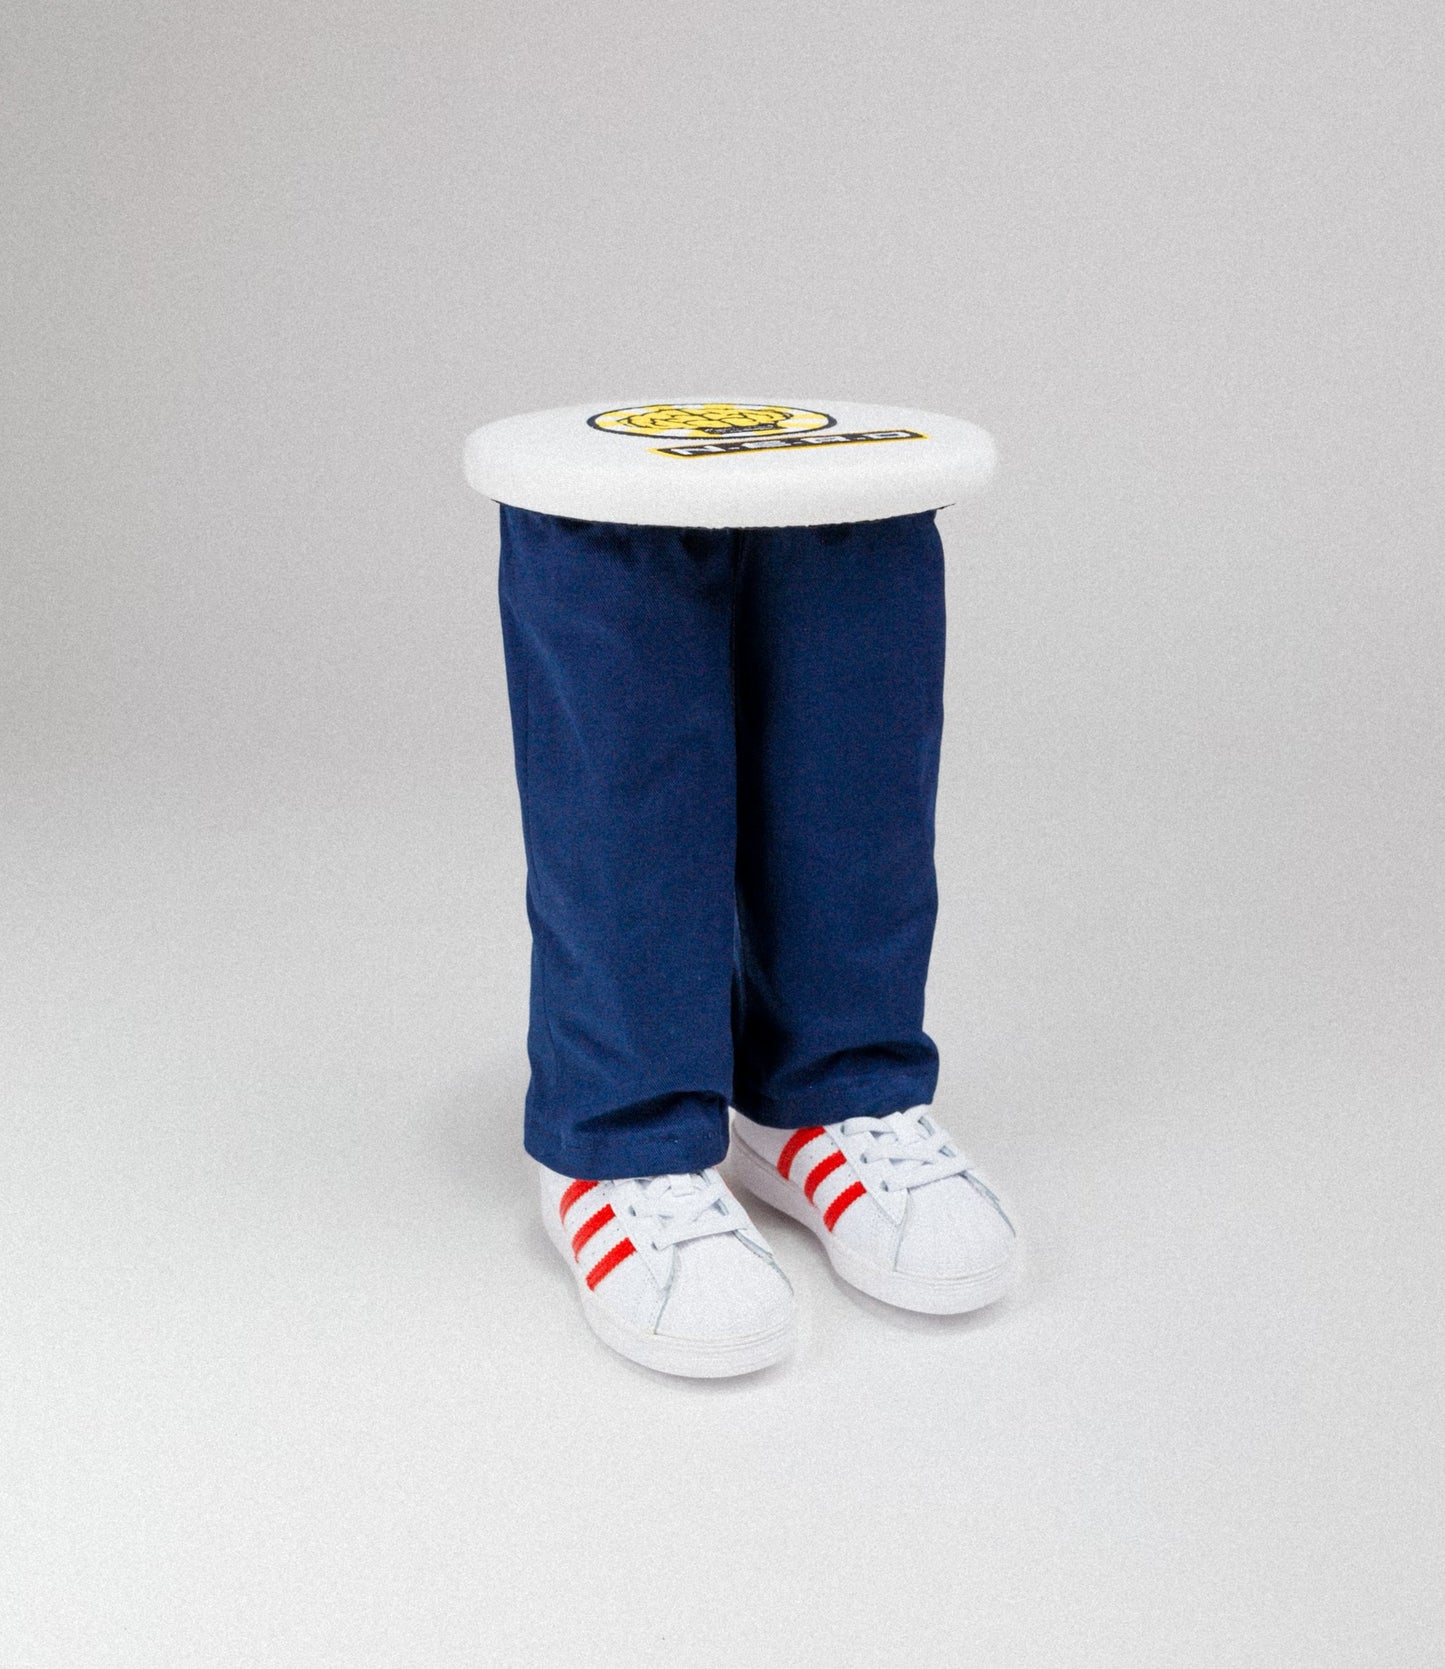 "Pharrell 2002" Miniature Boot-legs Table